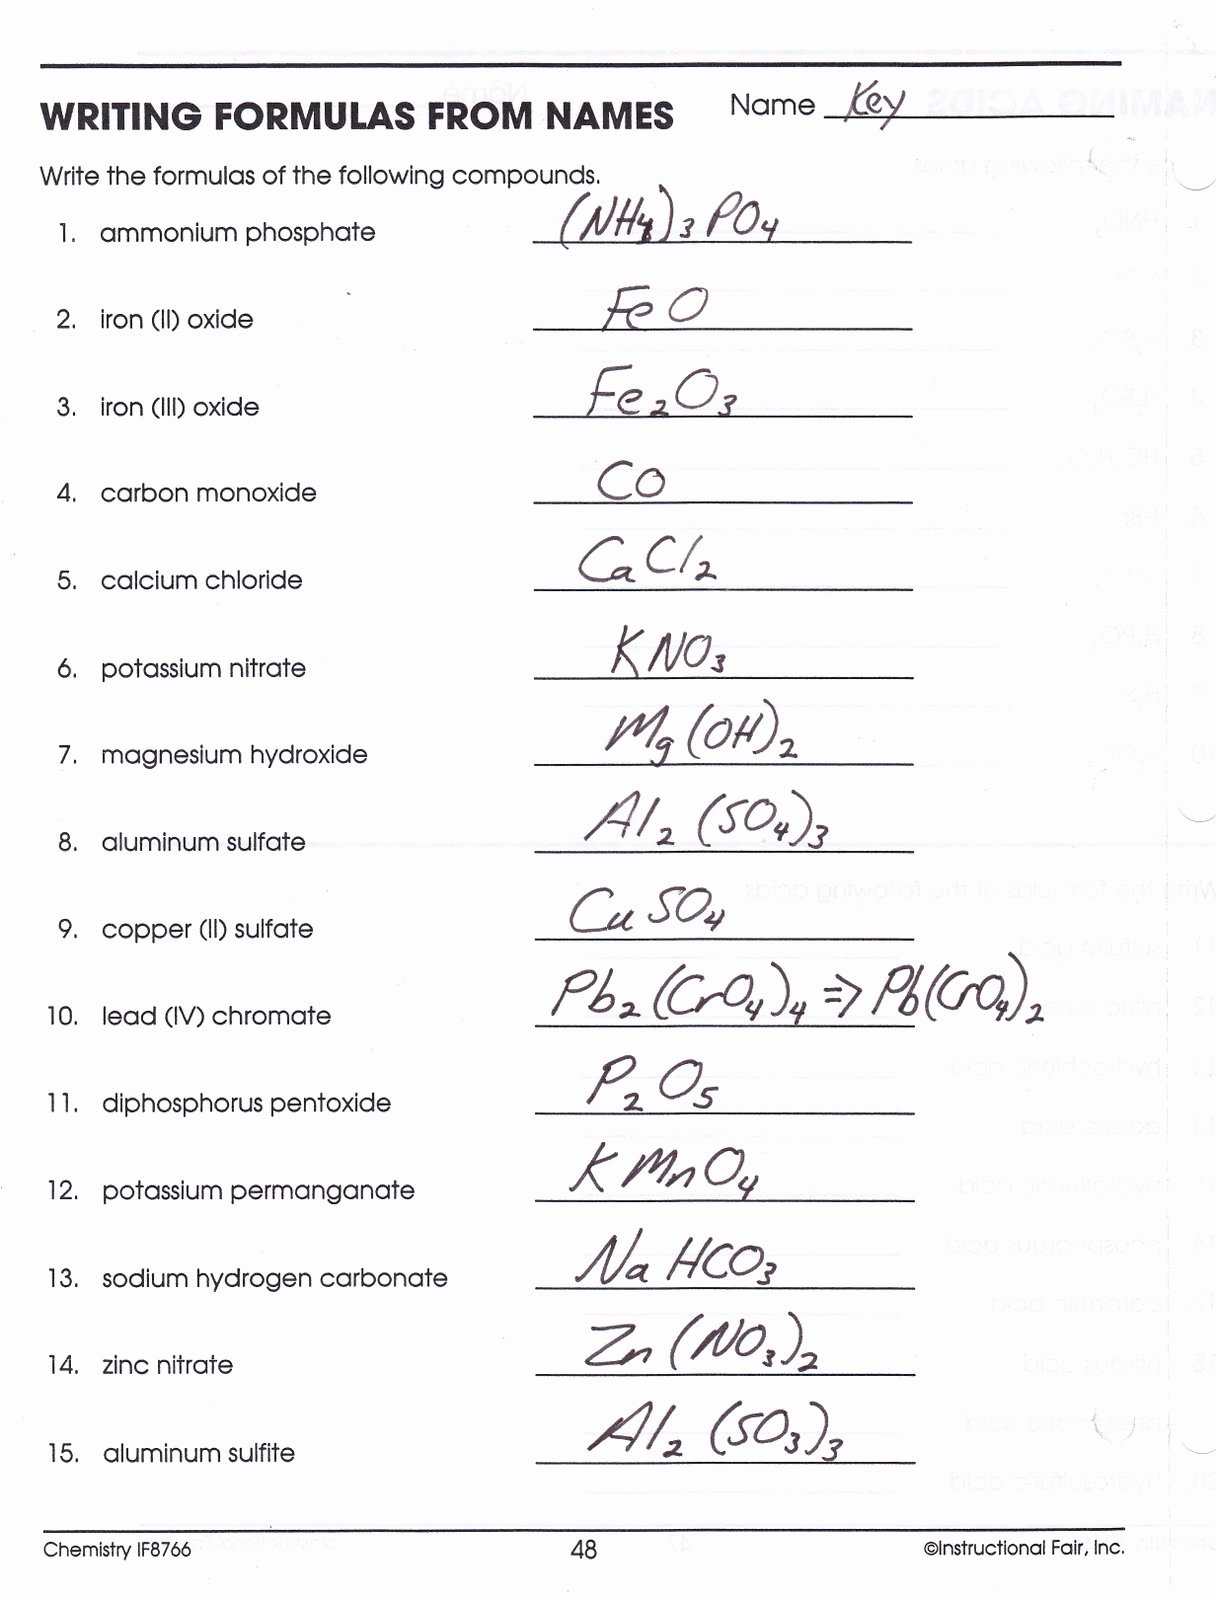 Chemical formula Writing Worksheet Fresh Heritage High School Chemistry 2010 11 Writing Pound